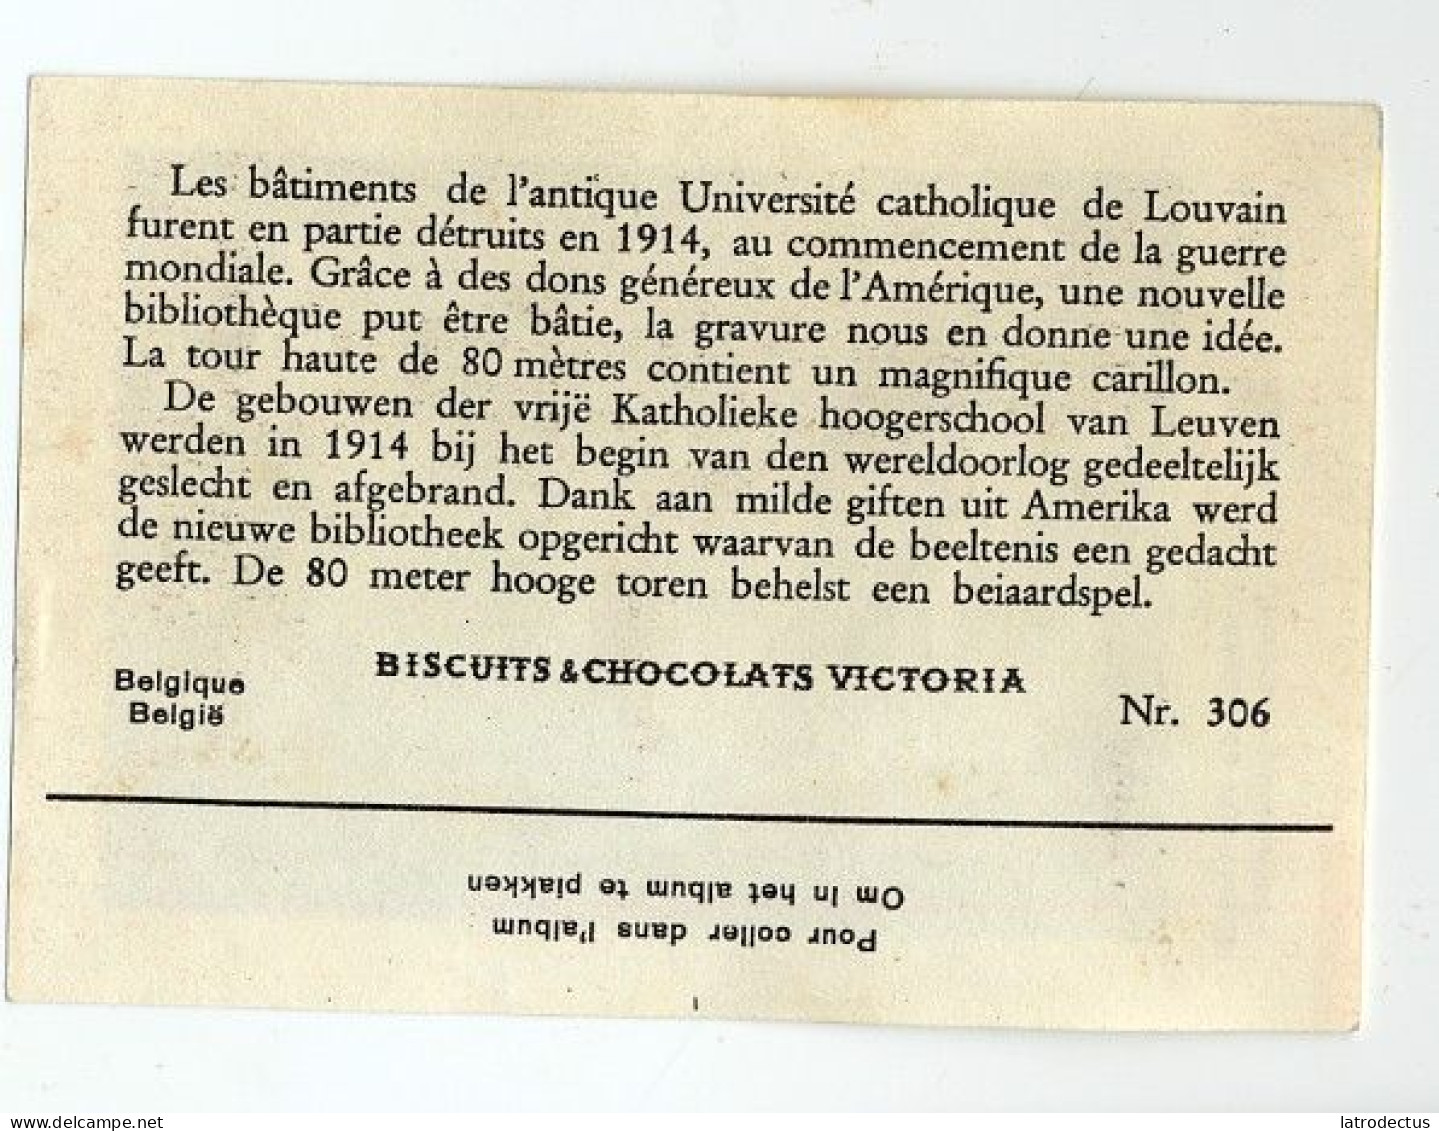 Victoria (1937) - 306 - België/Belgique, Leuven, Louvain - Victoria